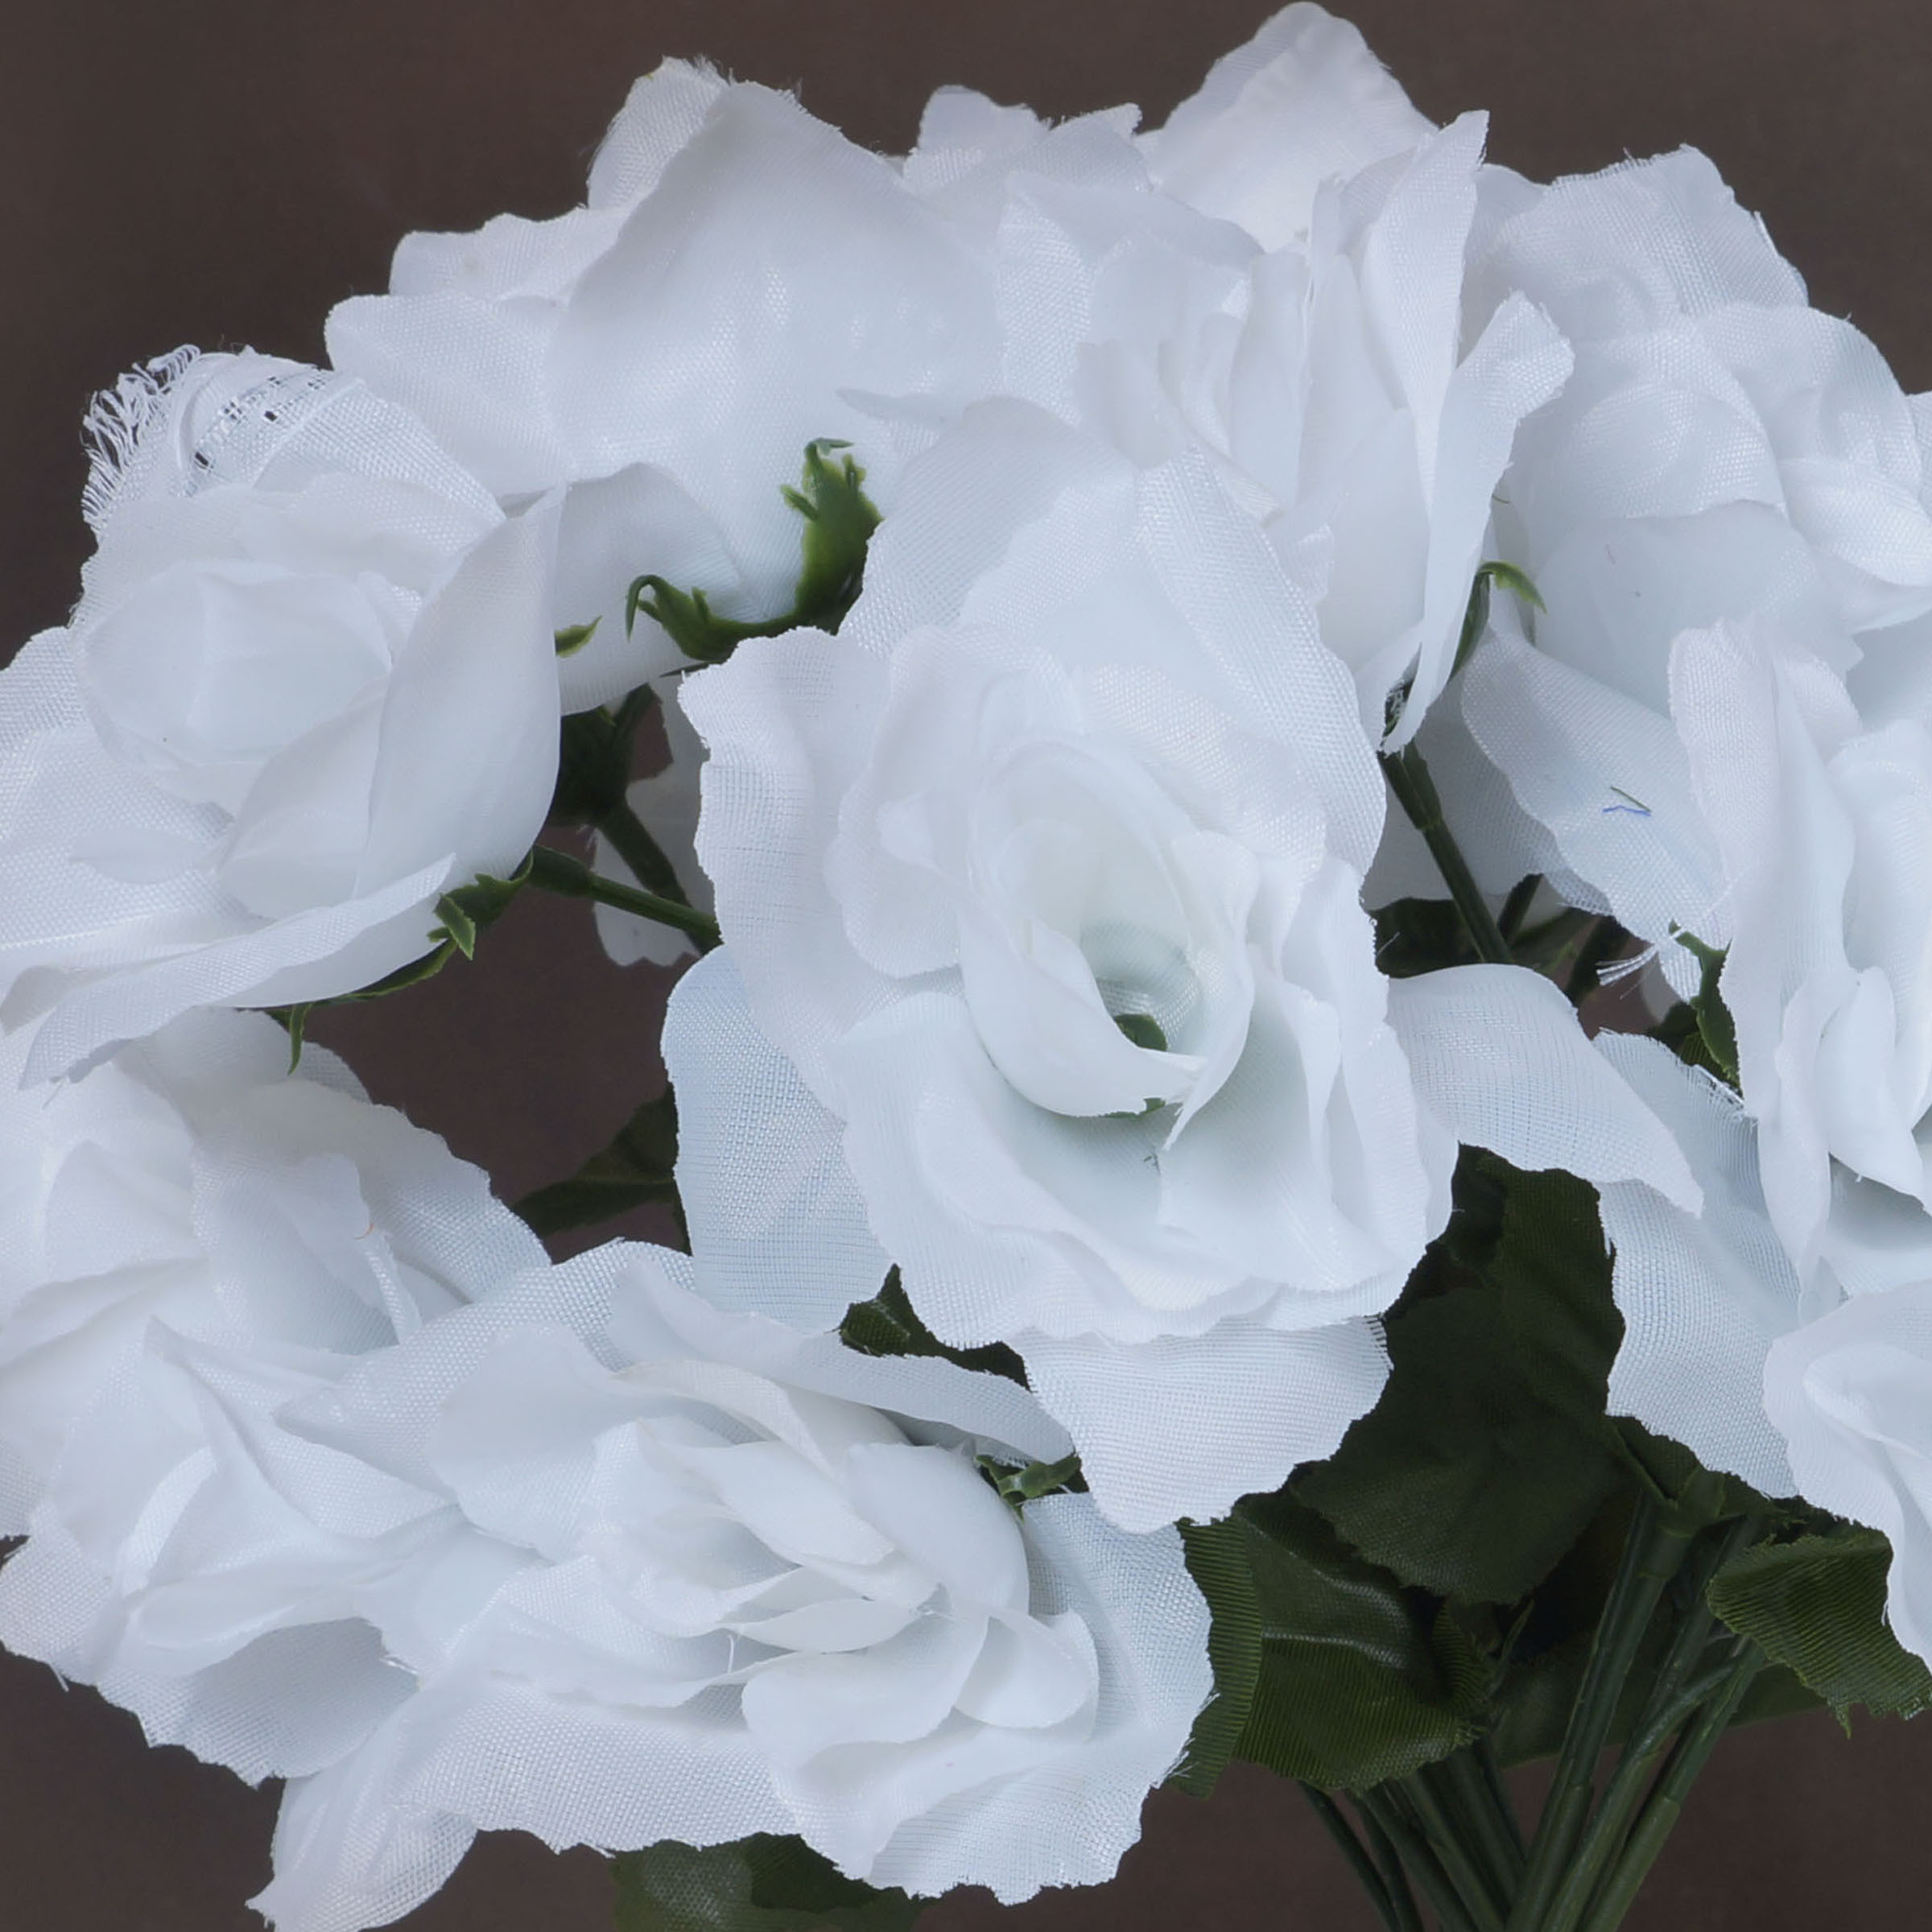 Wholesale Flowers For Weddings
 252 OPEN ROSES Wedding Wholesale Discount SILK Flowers